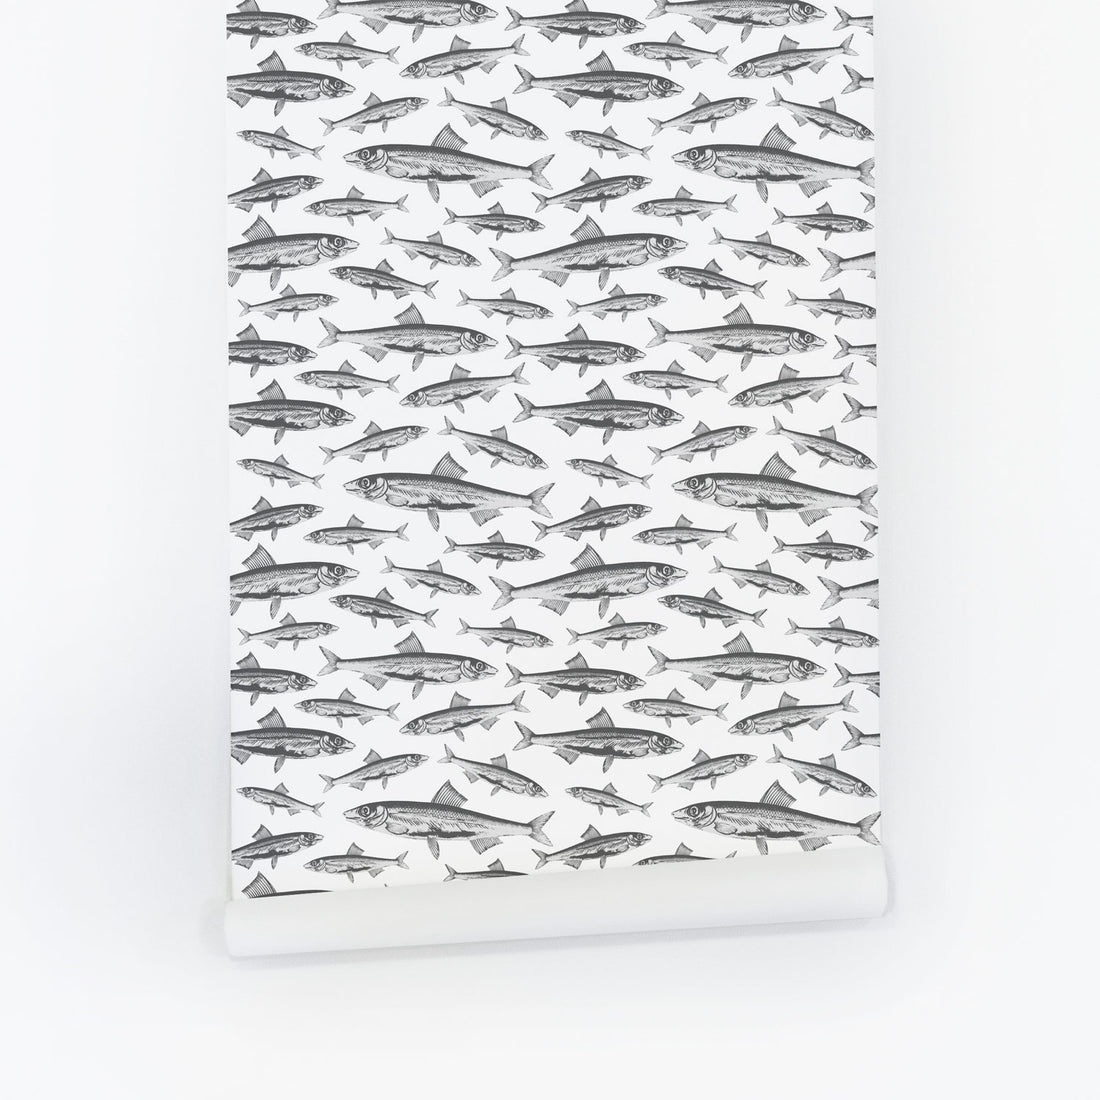 little grey sardines print wallpaper peel and stick